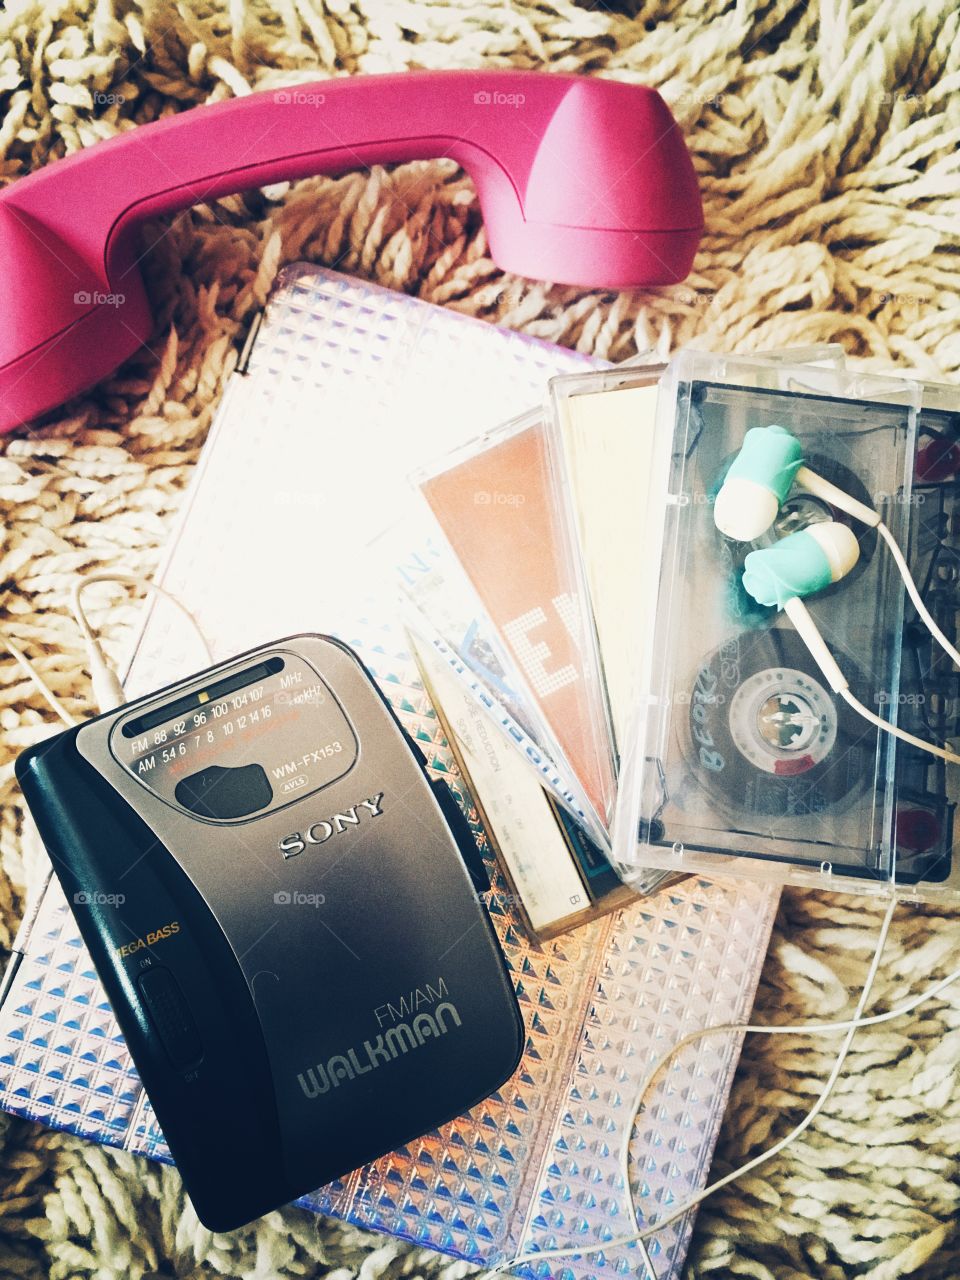 Cassettes and Walkmen 